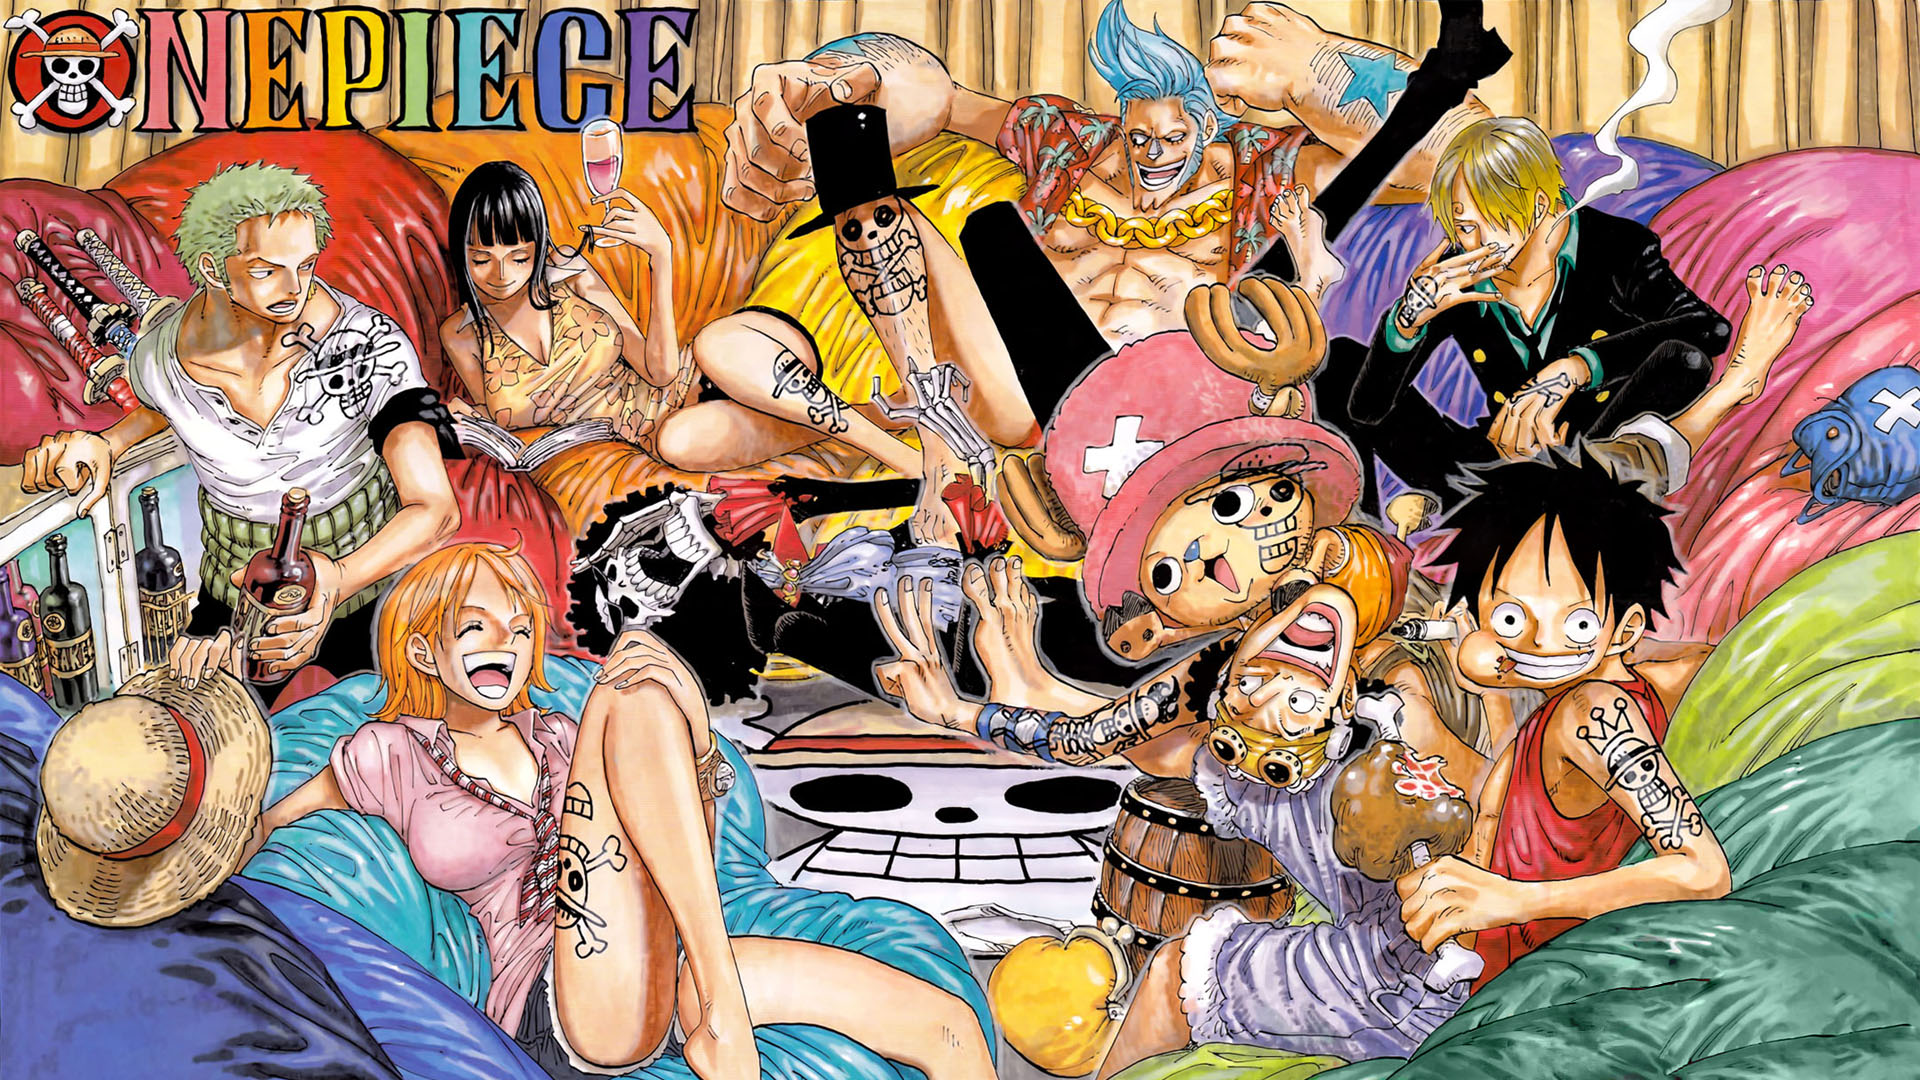 One Piece wallpaper hd free download